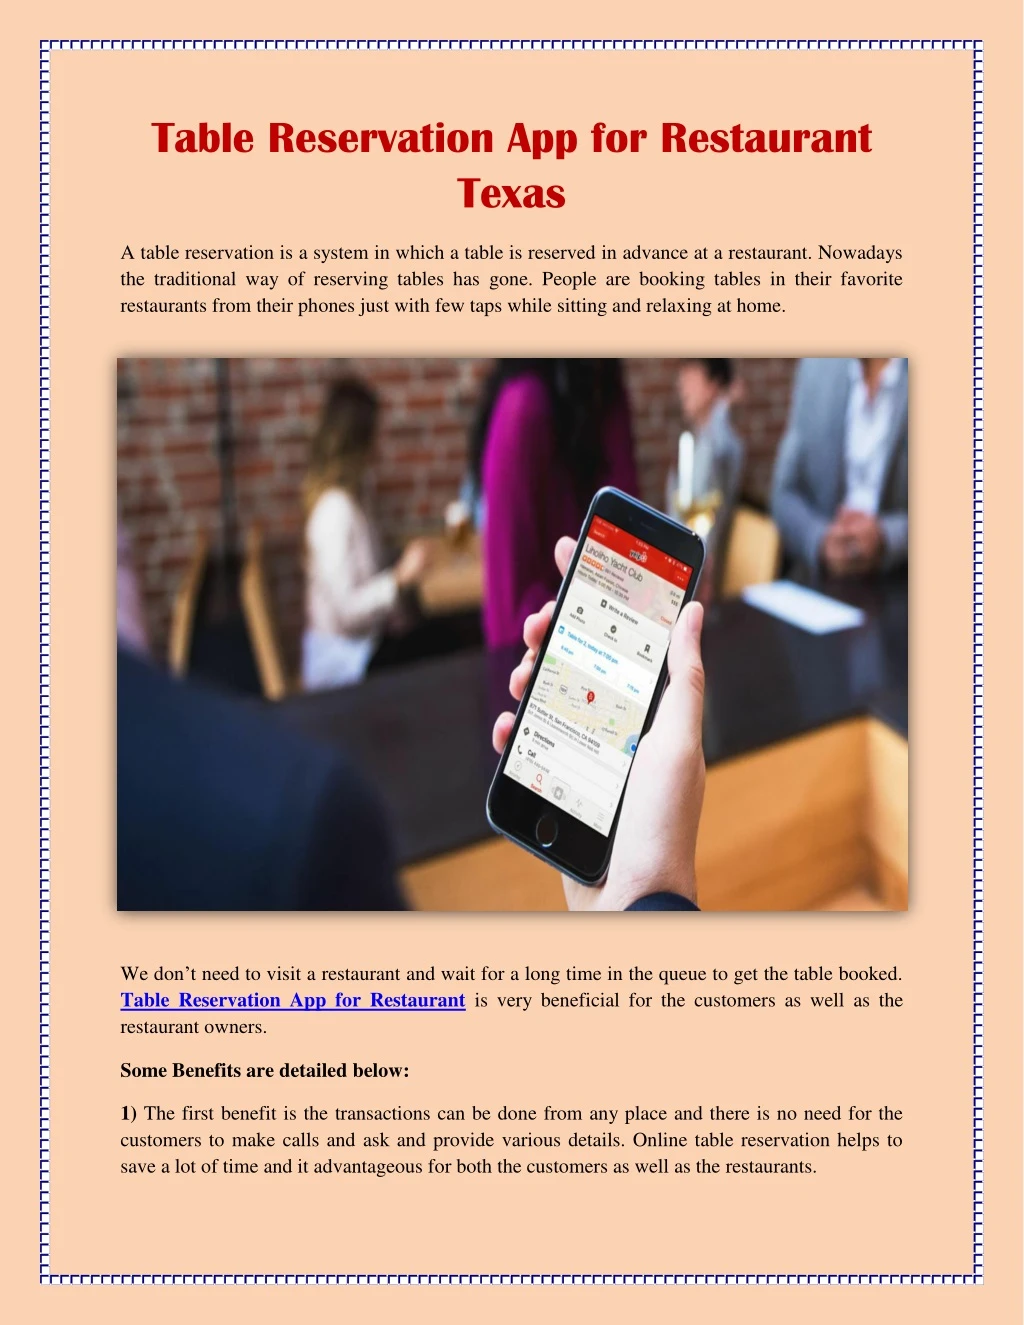 table reservation app for restaurant texas